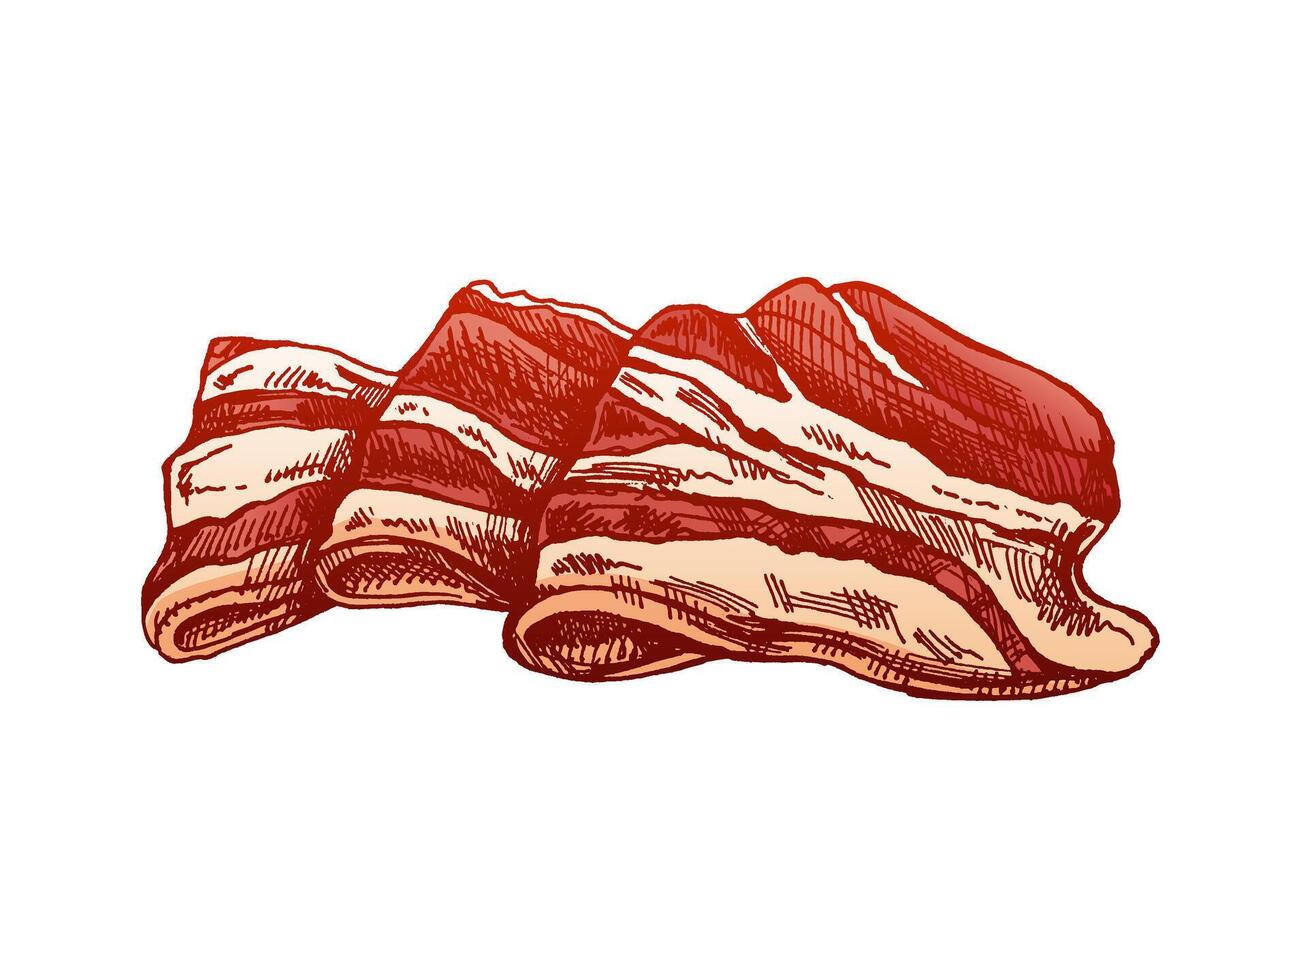 Hand-drawn colored vector sketch of hamon or pork meat, ham slice. Italian prosciutto vintage sketch. Butcher shop. Great for label, restaurant menu. Engraved image.